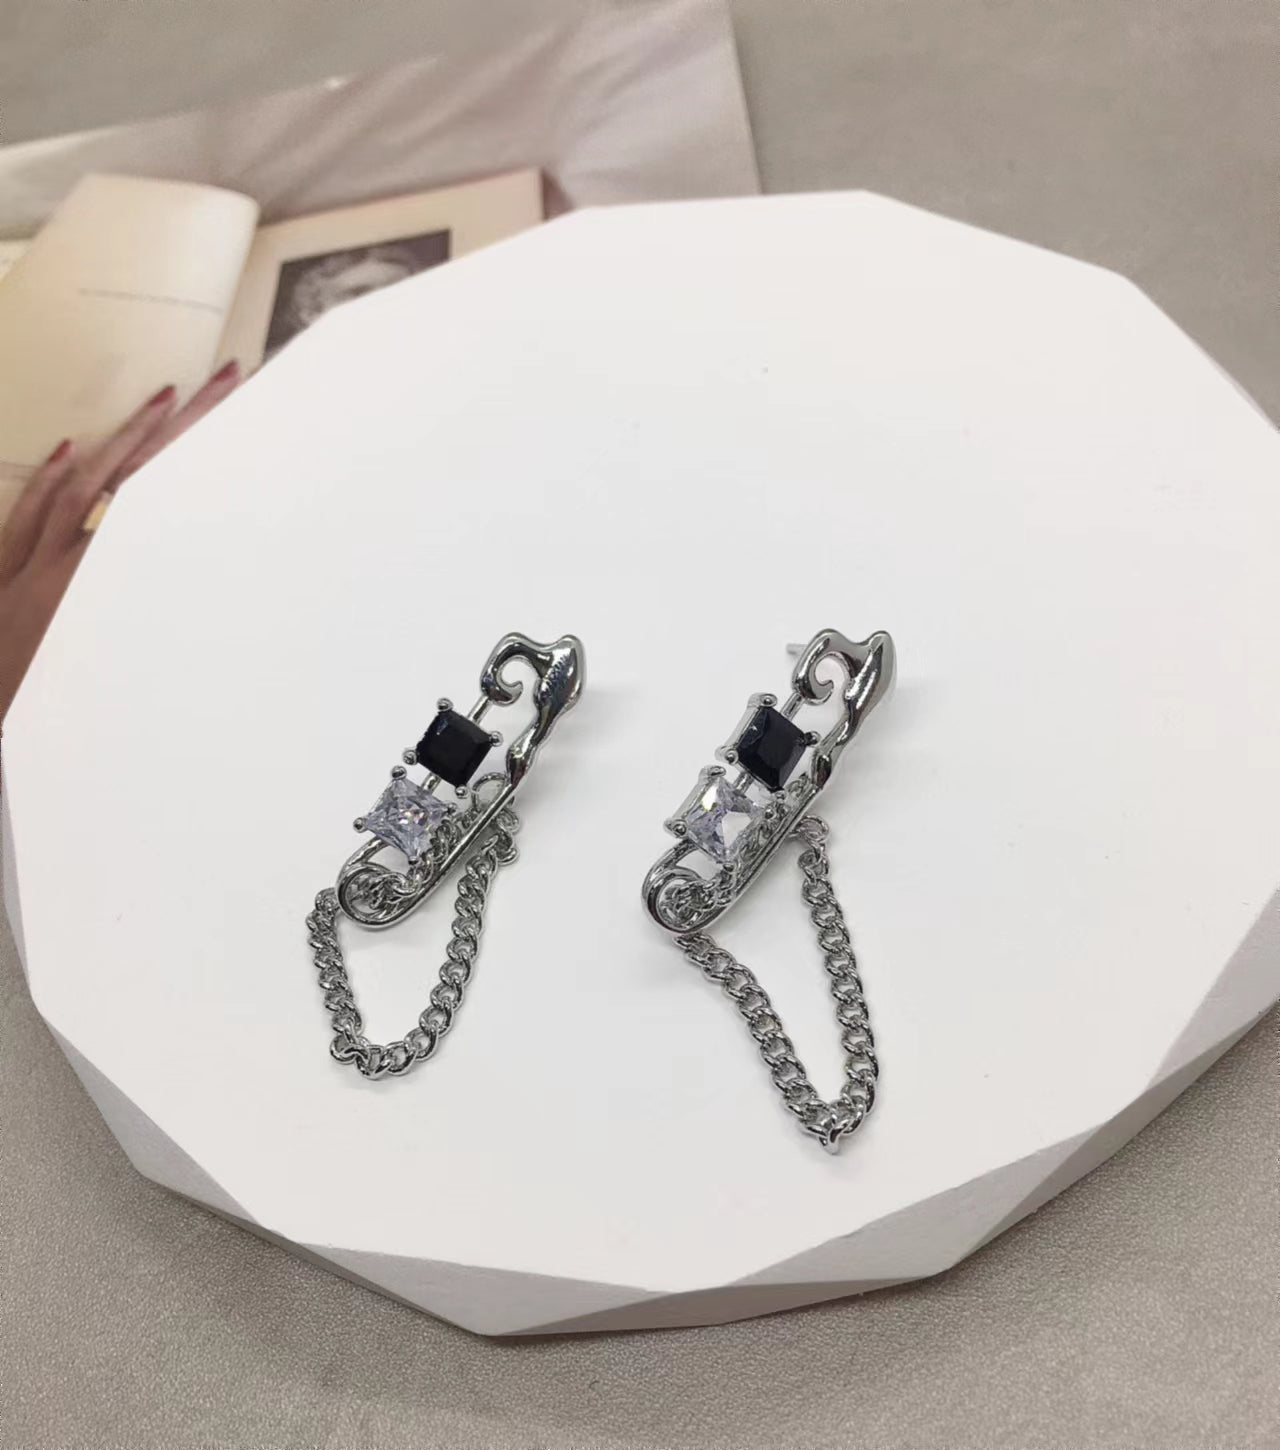 Design sense paper clip black and white diamond earrings Advanced sense new chain sweet cool earrings